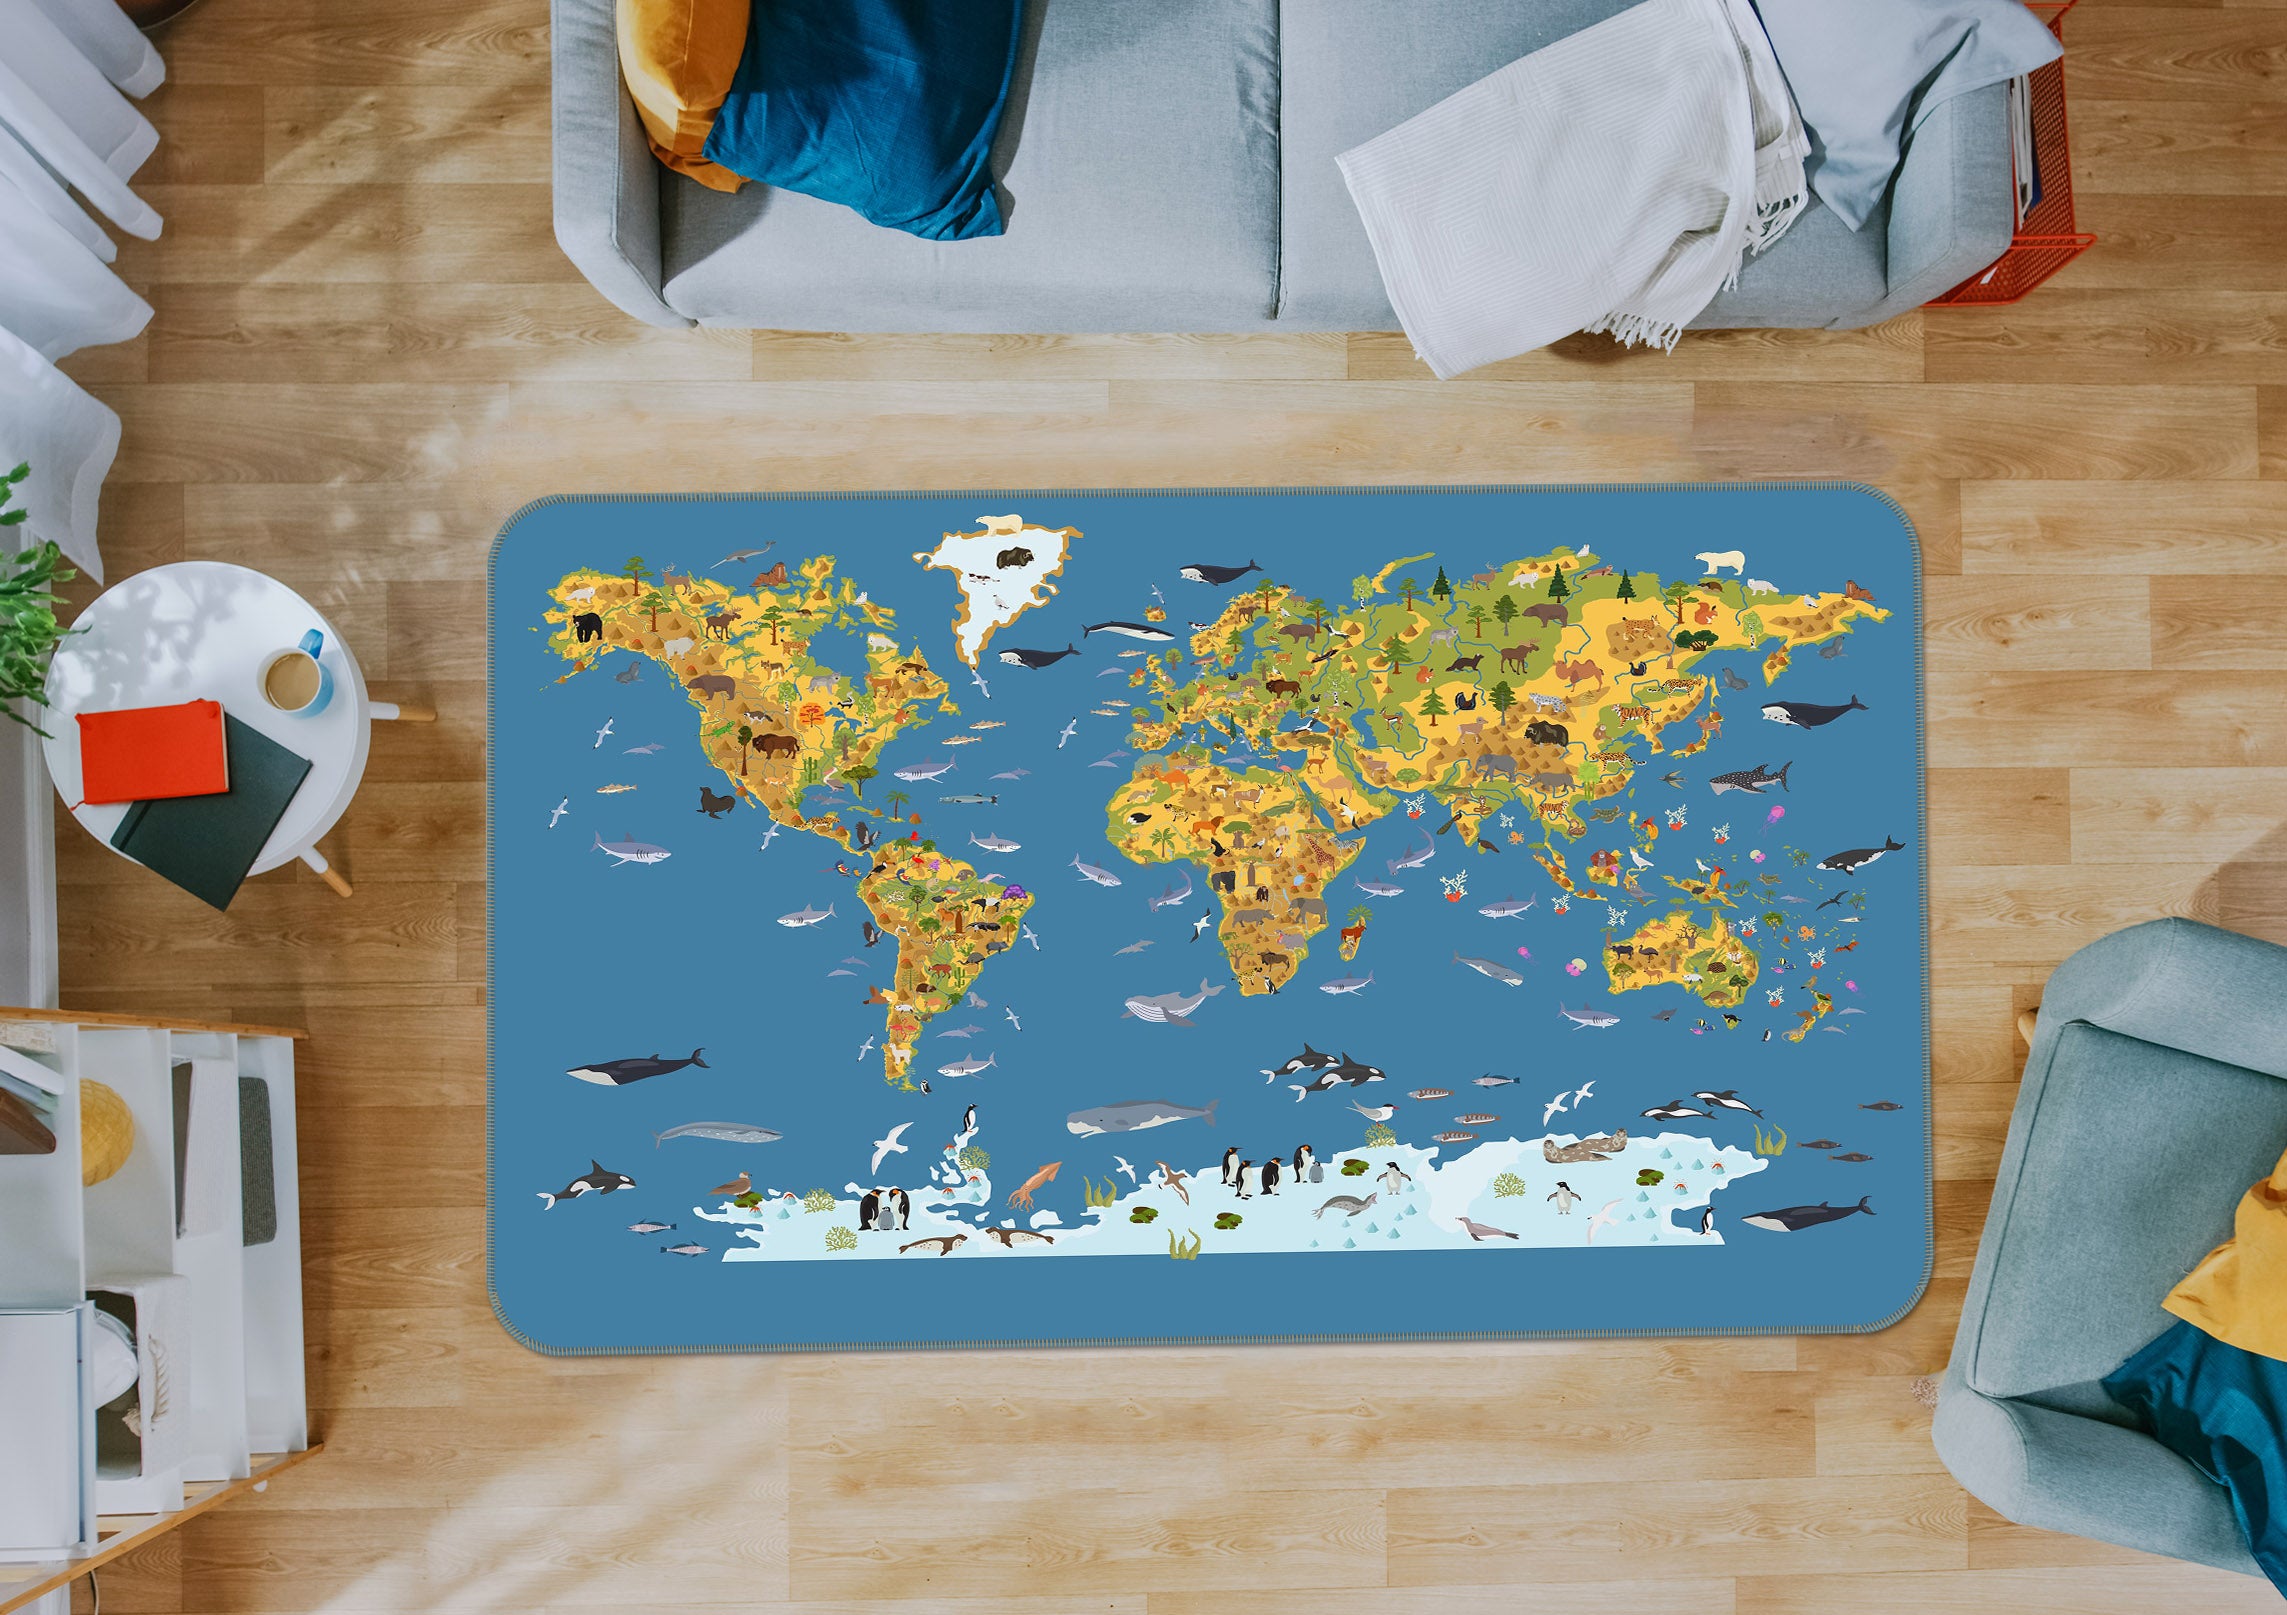 3D Beautiful World 301 World Map Non Slip Rug Mat